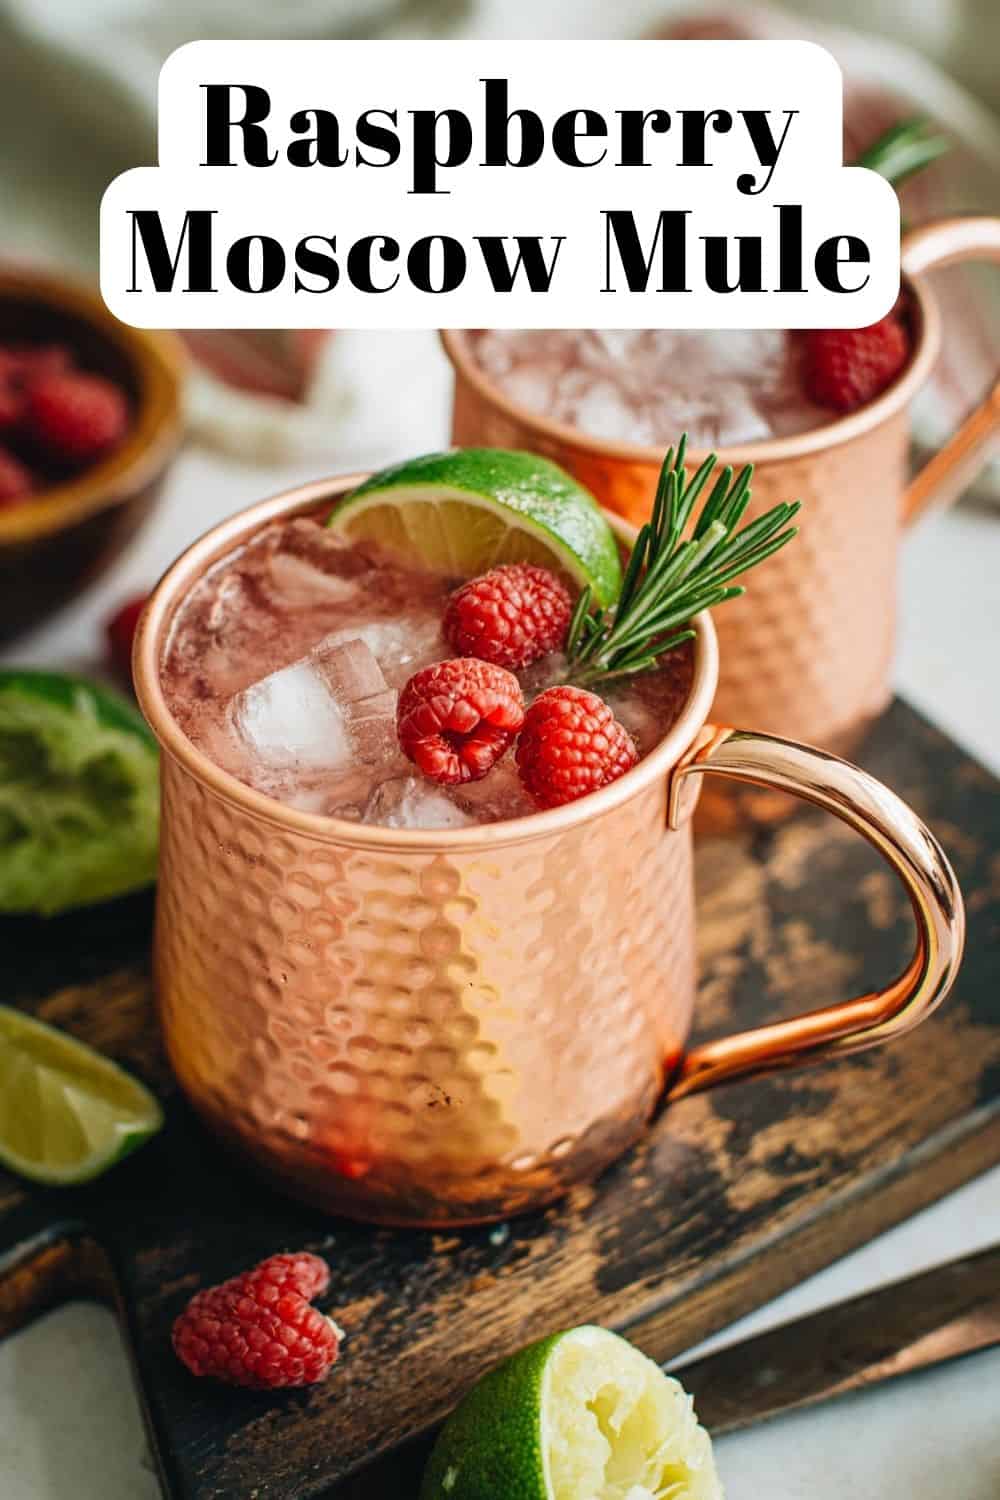 Raspberry mule in a copper mug with fresh strawberries for a garnish.